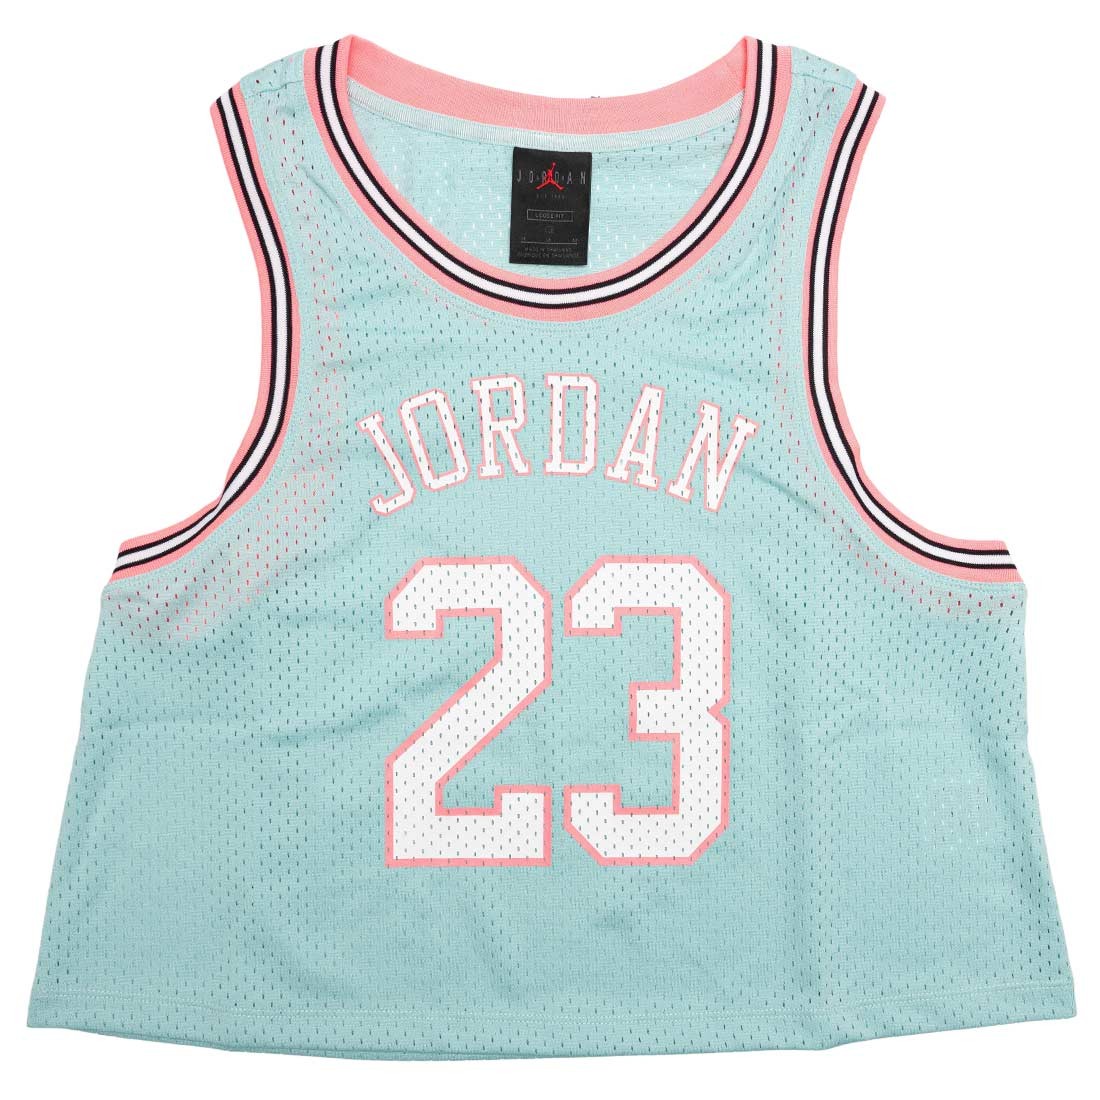 Jordan Women Essential Jersey (light dew)